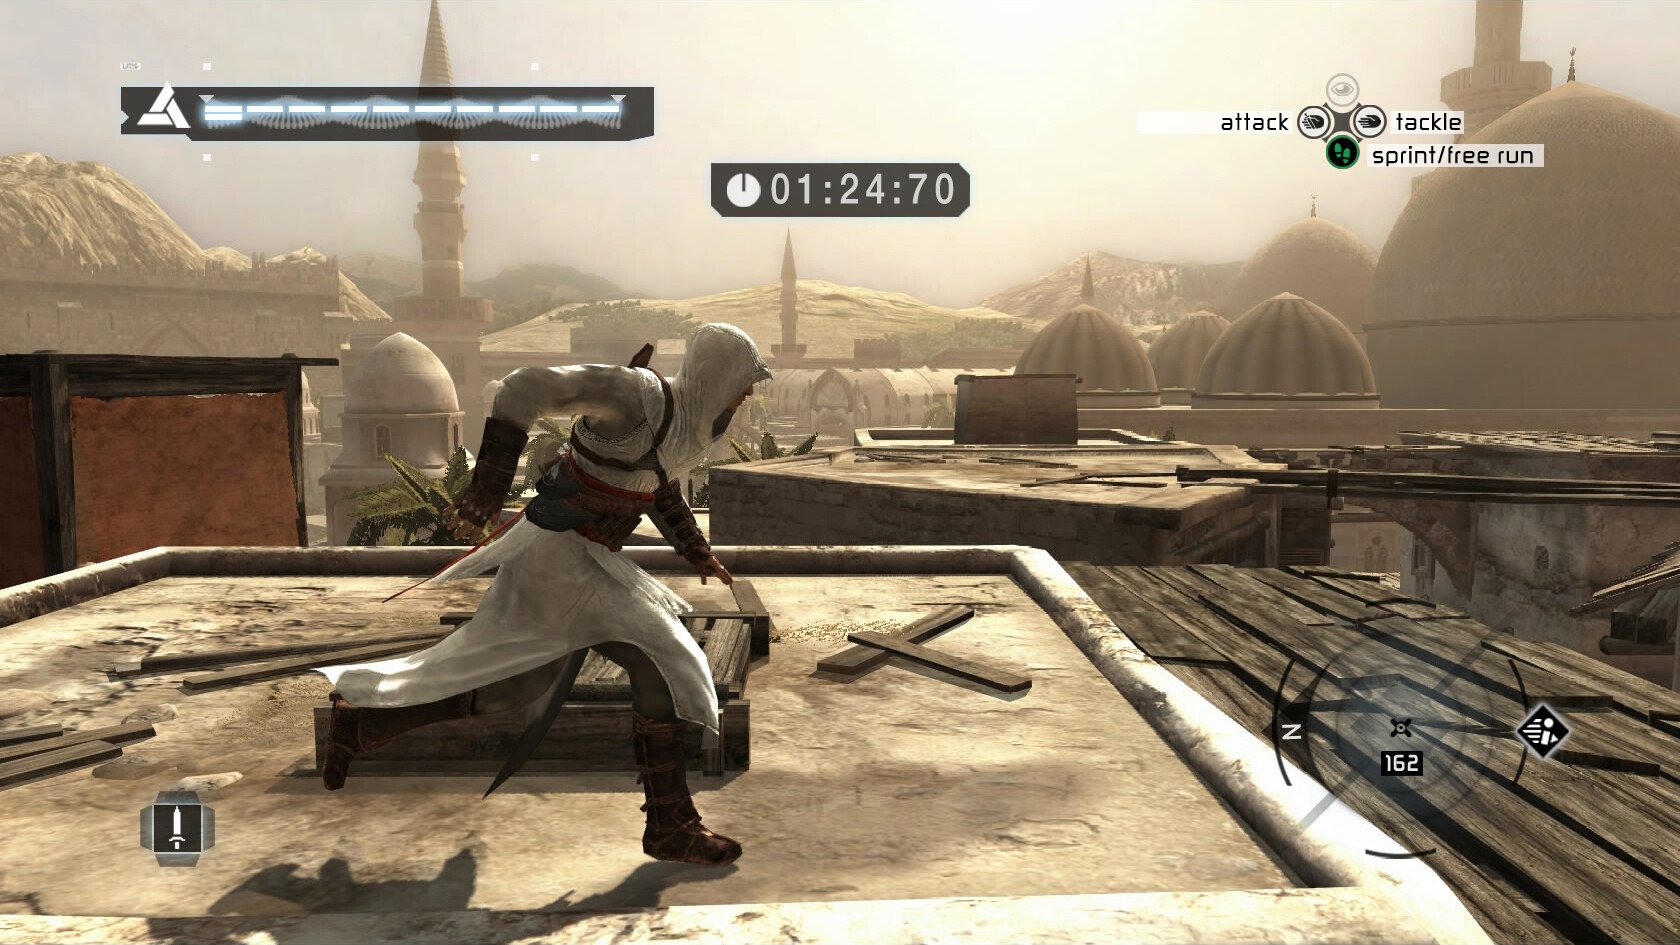 Buy Assassin's Creed III Steam Key GLOBAL - Cheap - !